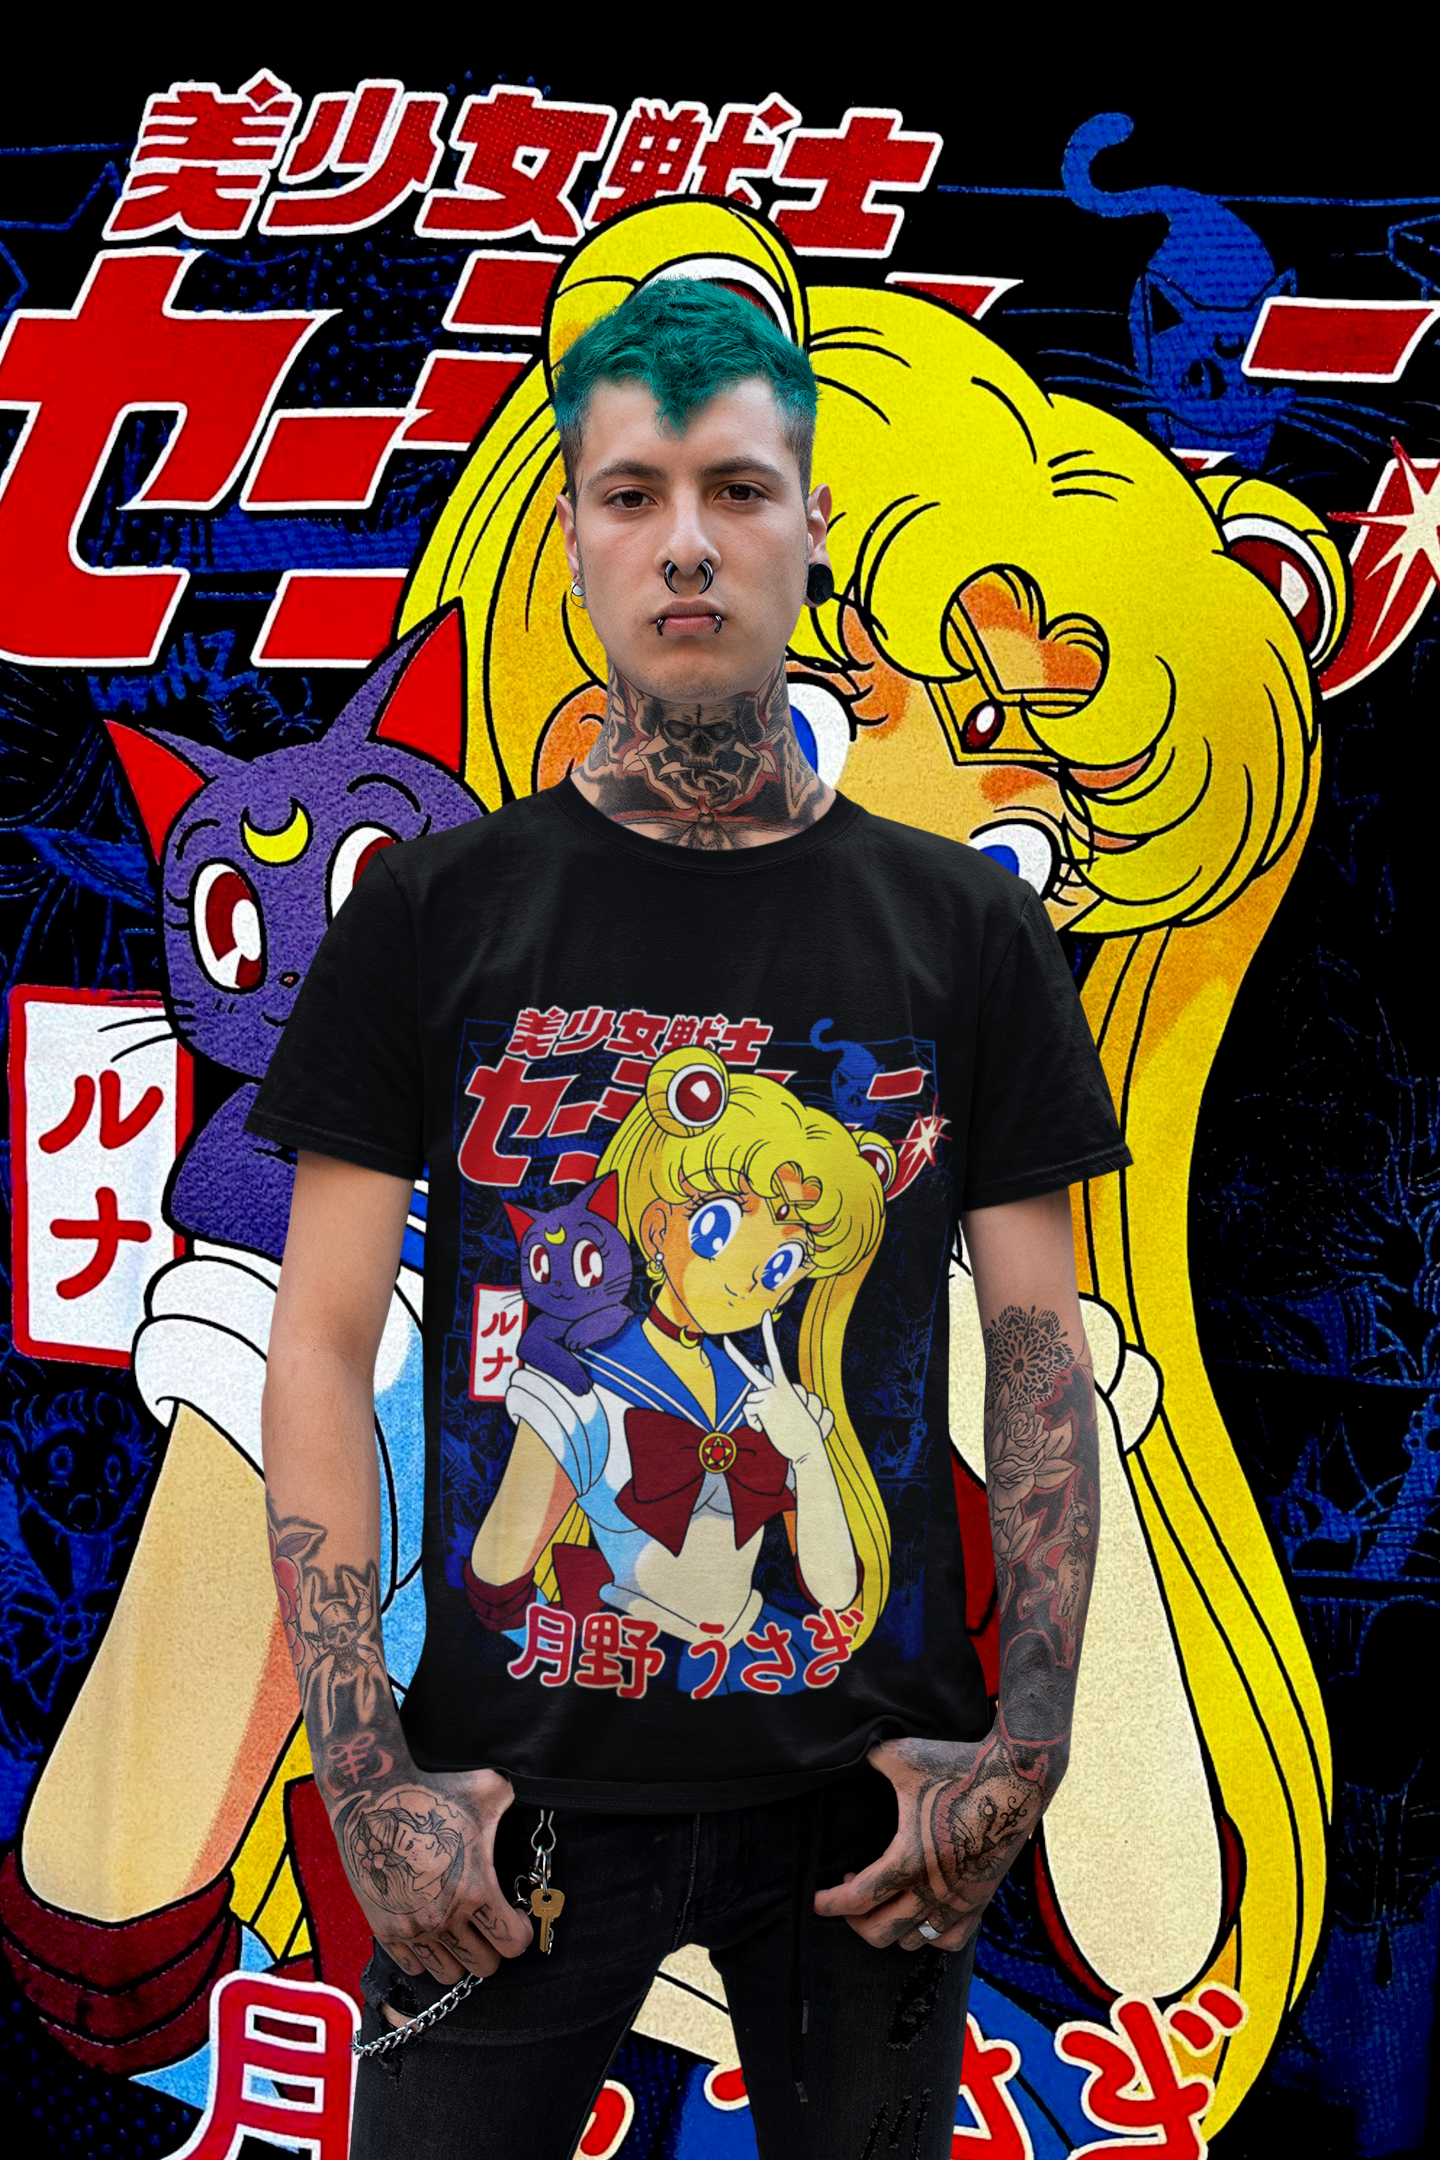 Polera Sailor Moon retro